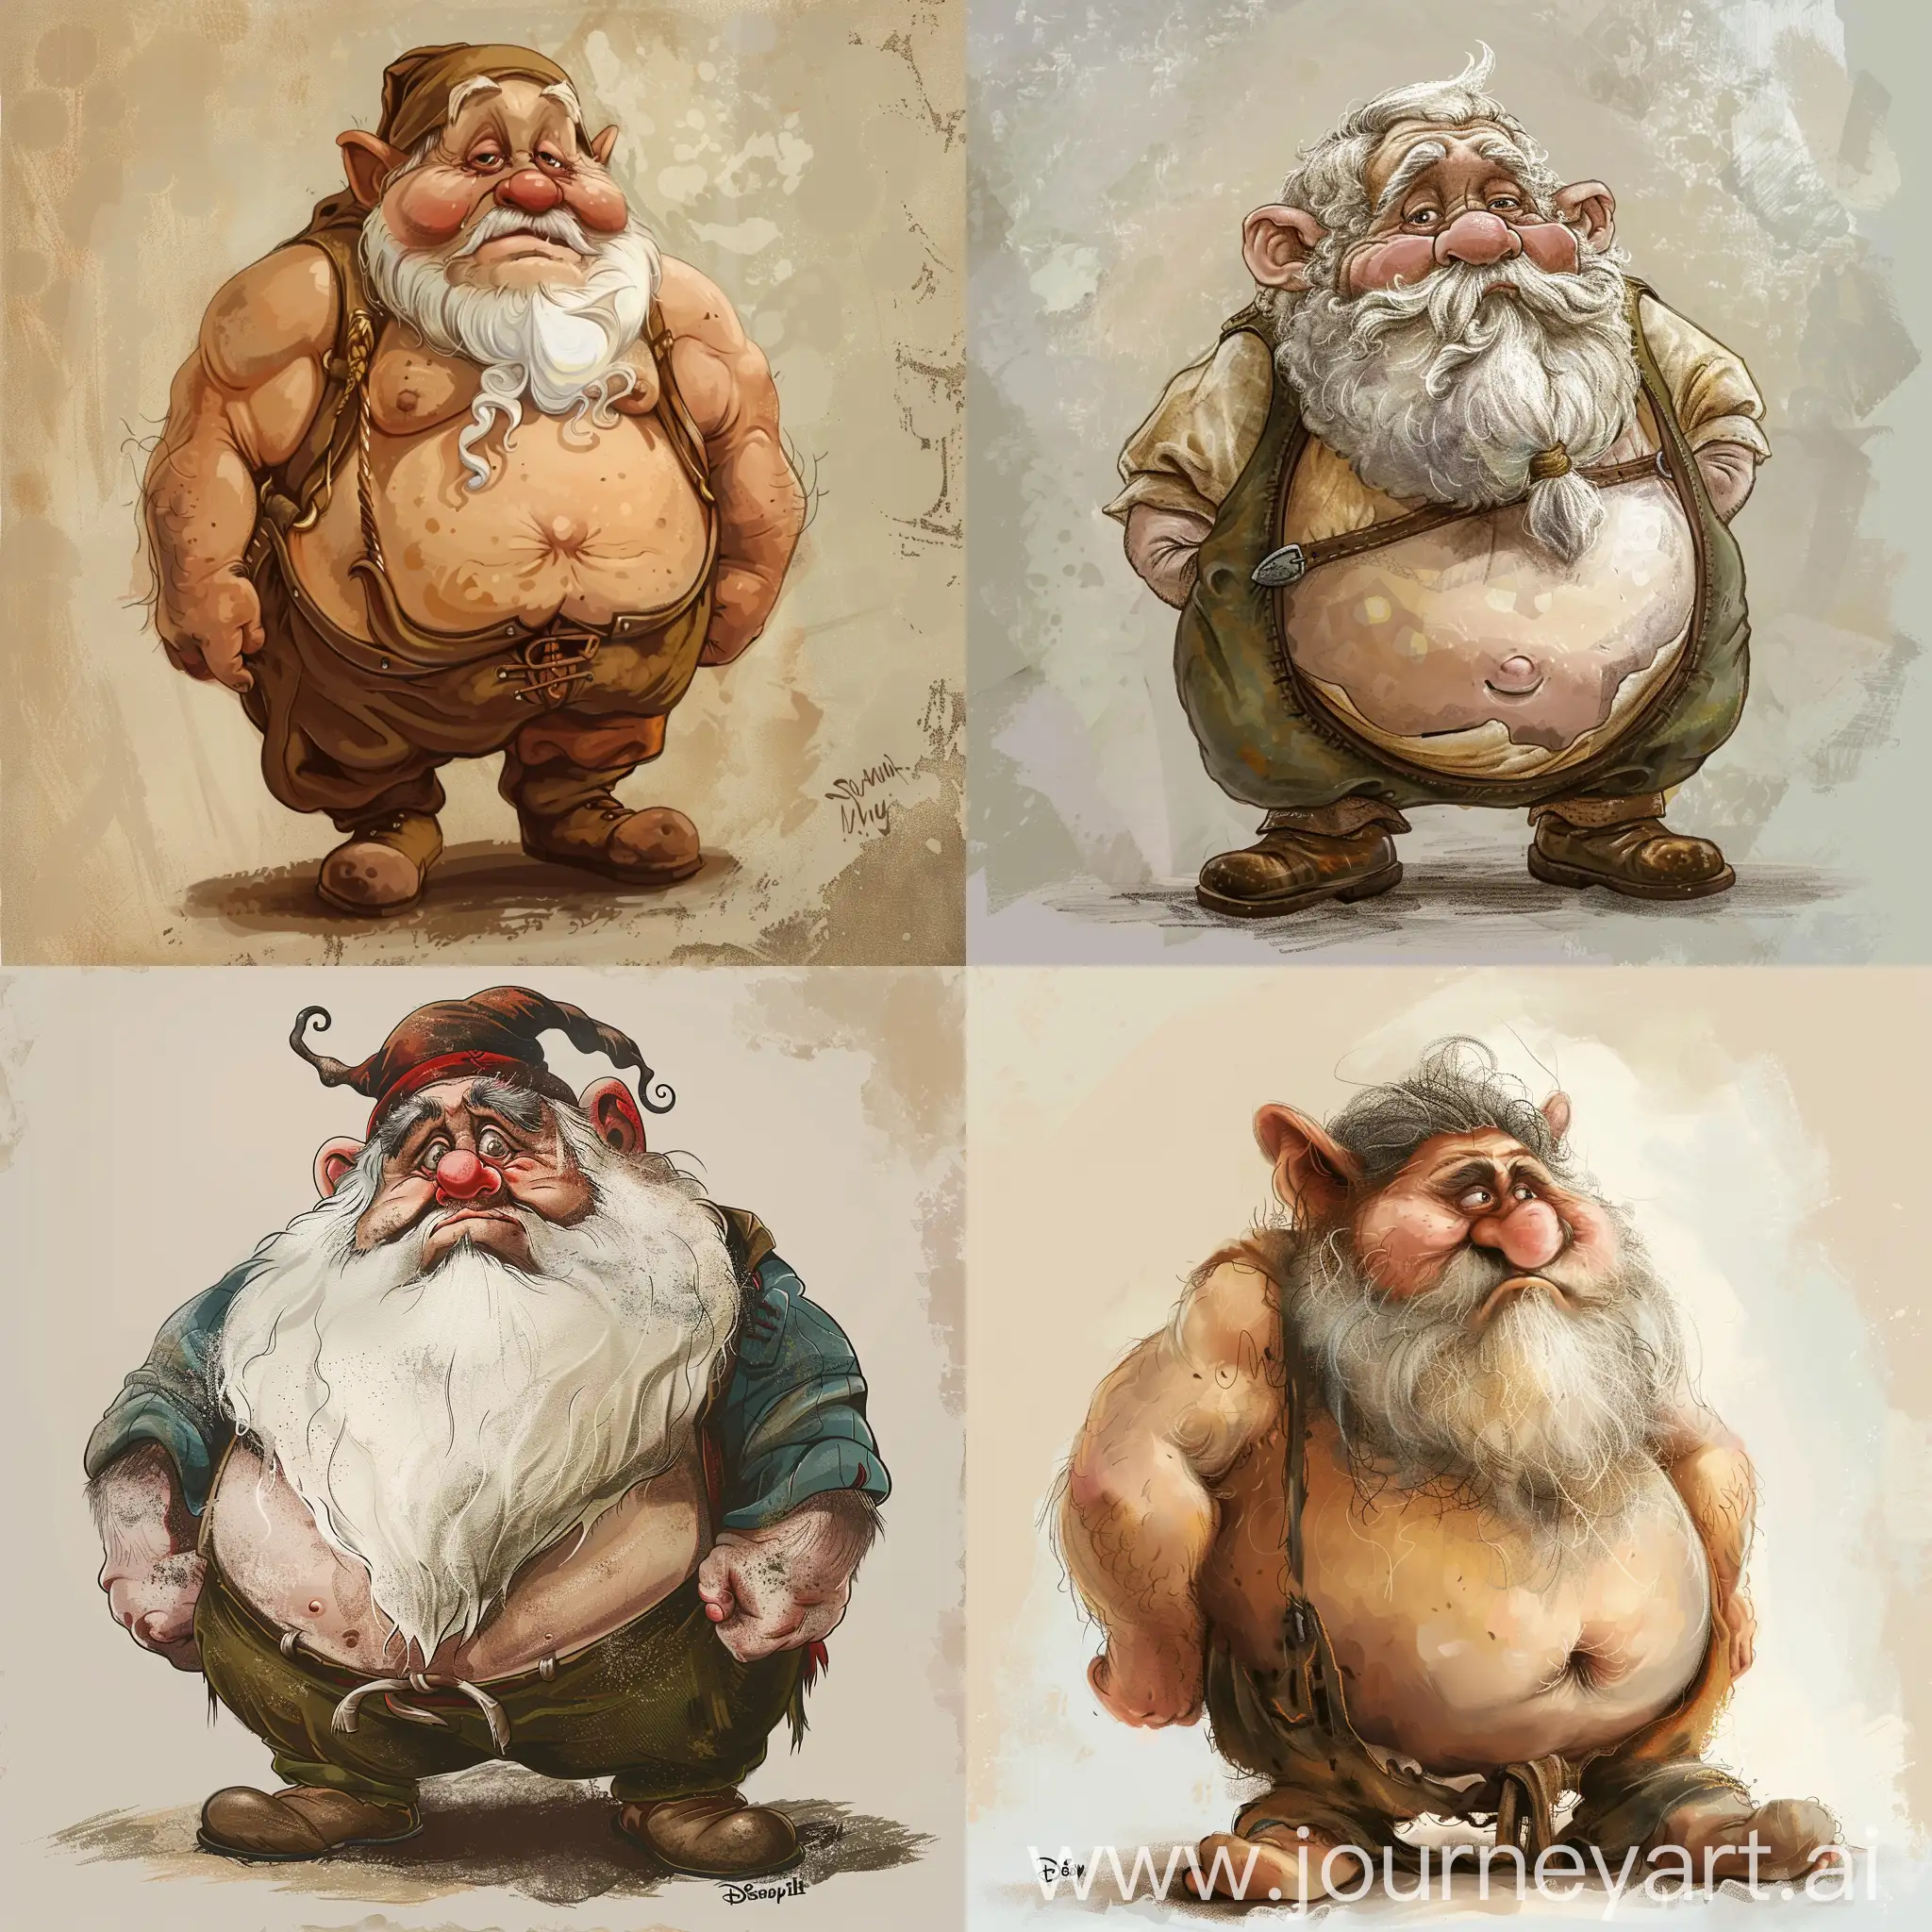 Woeful-Dwarf-from-Snowhite-Disney-Style-Digital-Illustration